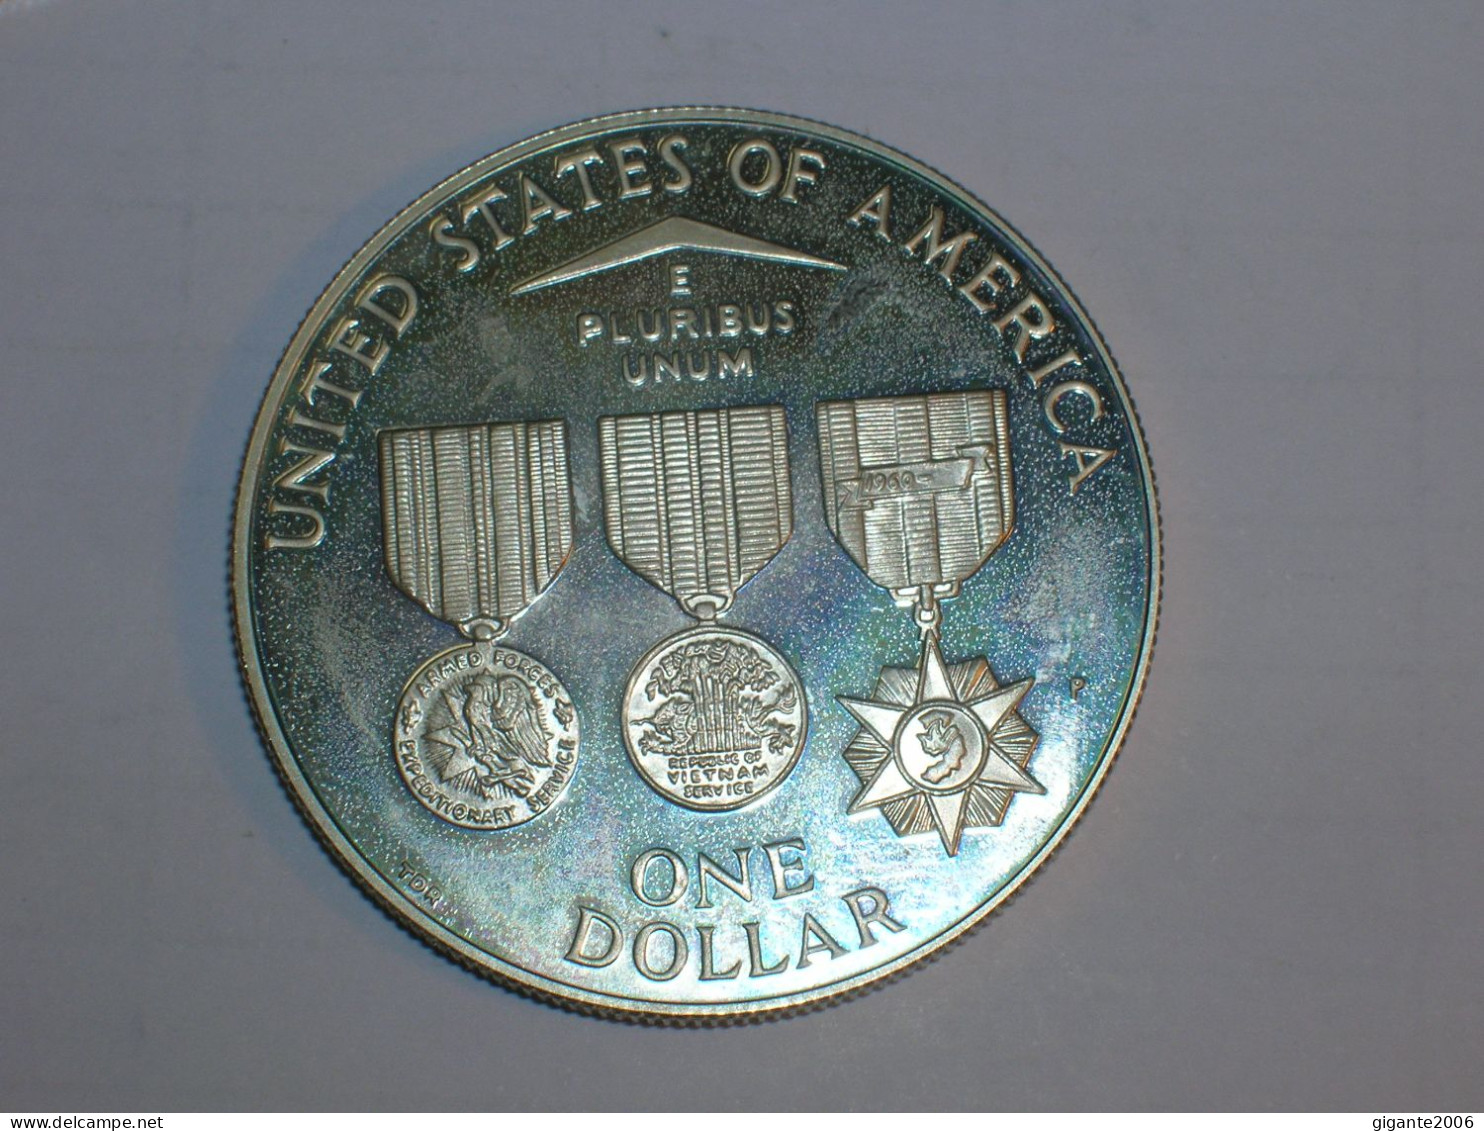 Estados Unidos/USA 1 Dolar Conmemorativo, 1994 P, Proof, Memorial Veteranos Vietnan (13954) - Conmemorativas